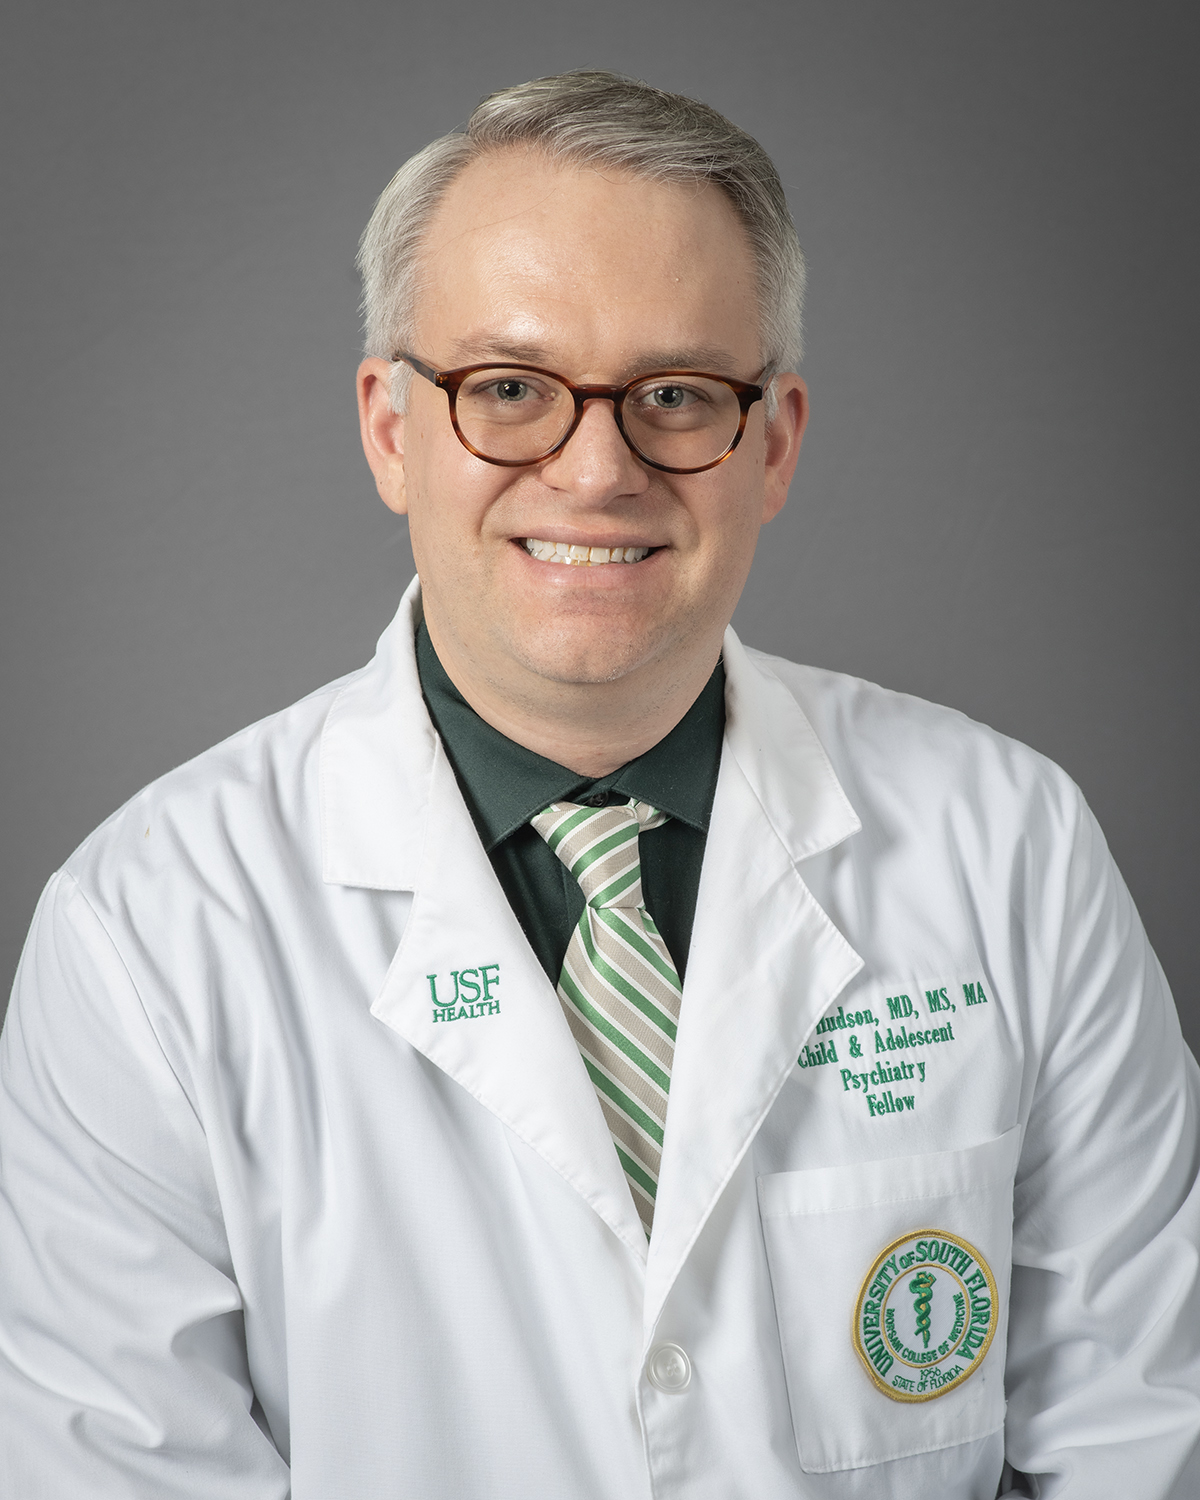 Dr. William Hudson with USF Health Pediatrics